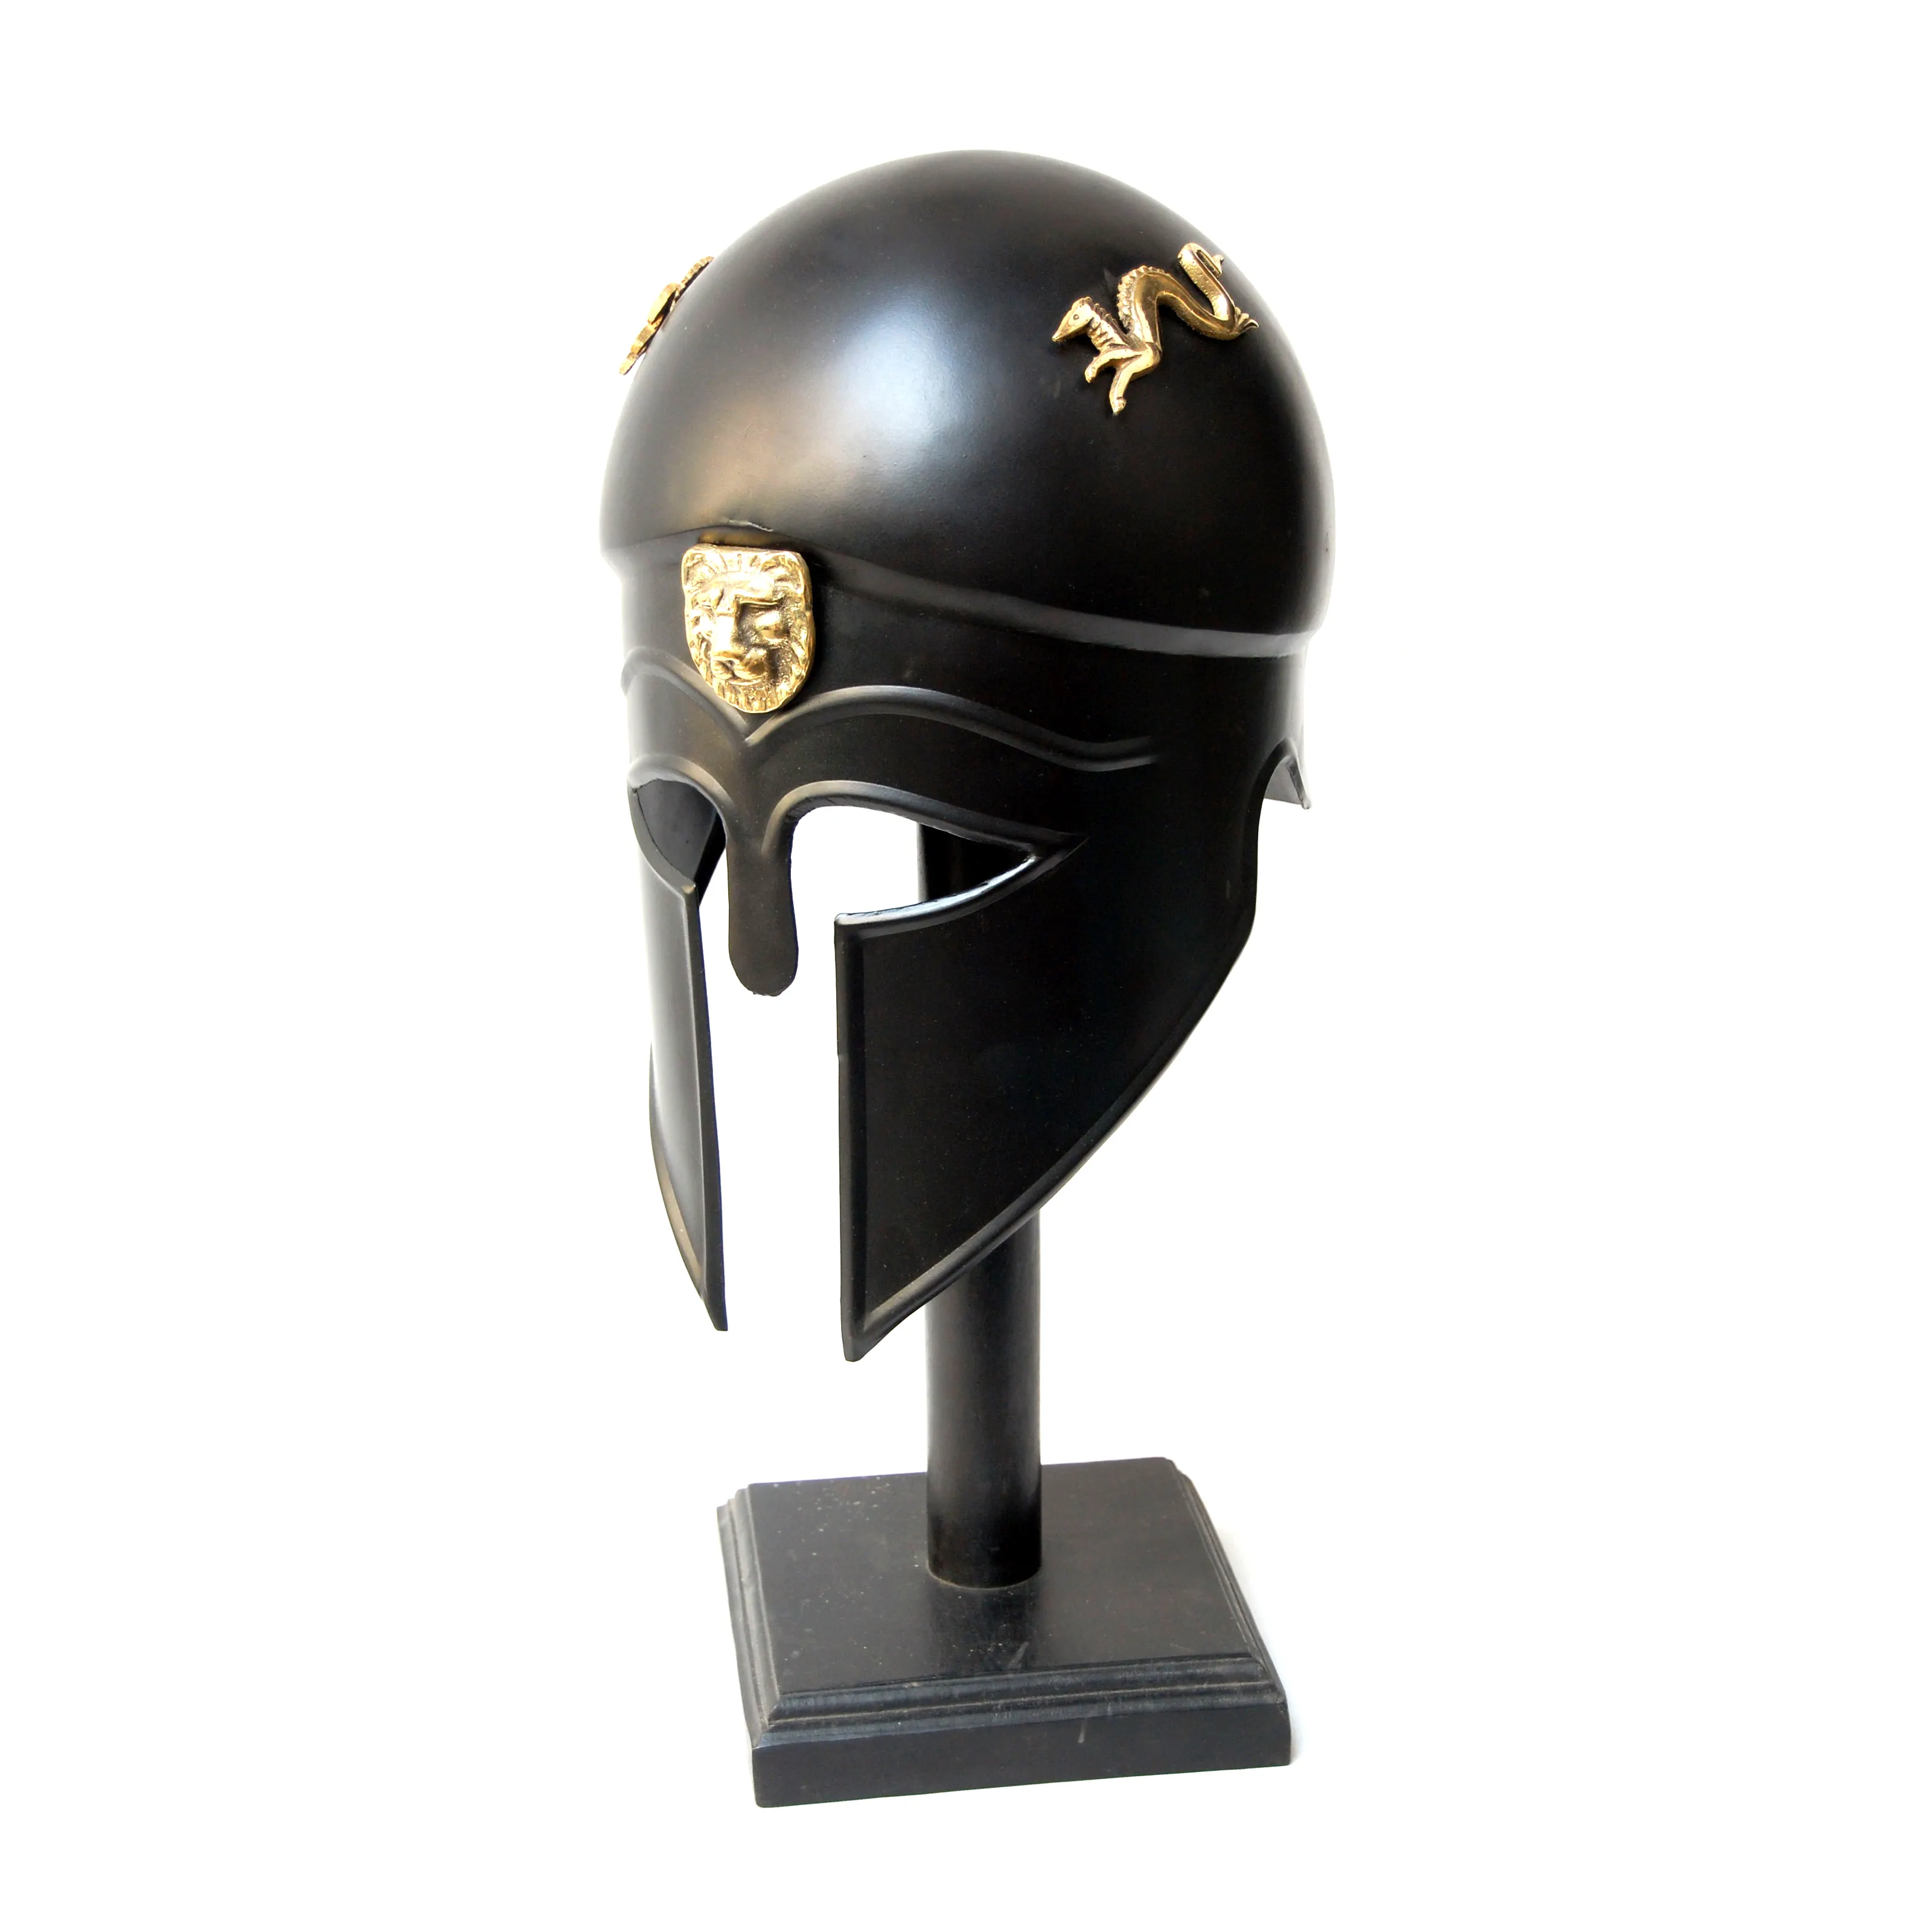 Dijual Helm Armor Corinthian Yunani dengan Hitam Antik/Singa Dan Logo Naga Helm Armor Abad Pertengahan